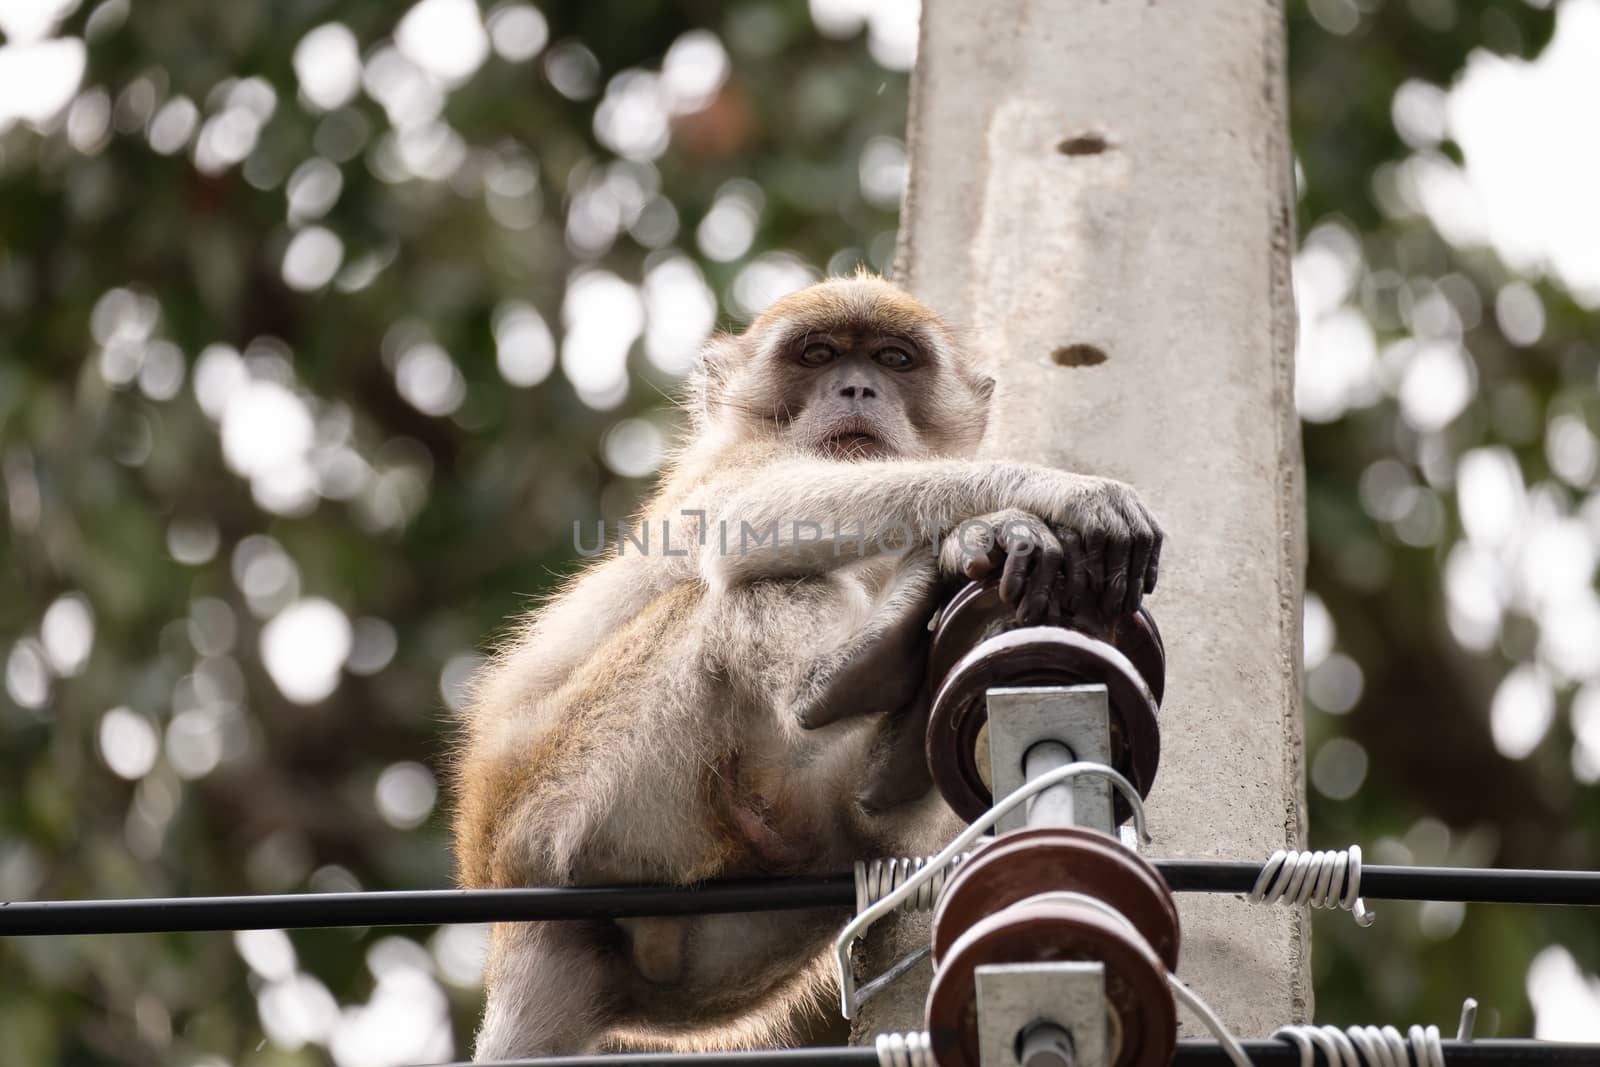 Monkey sitting on a pole